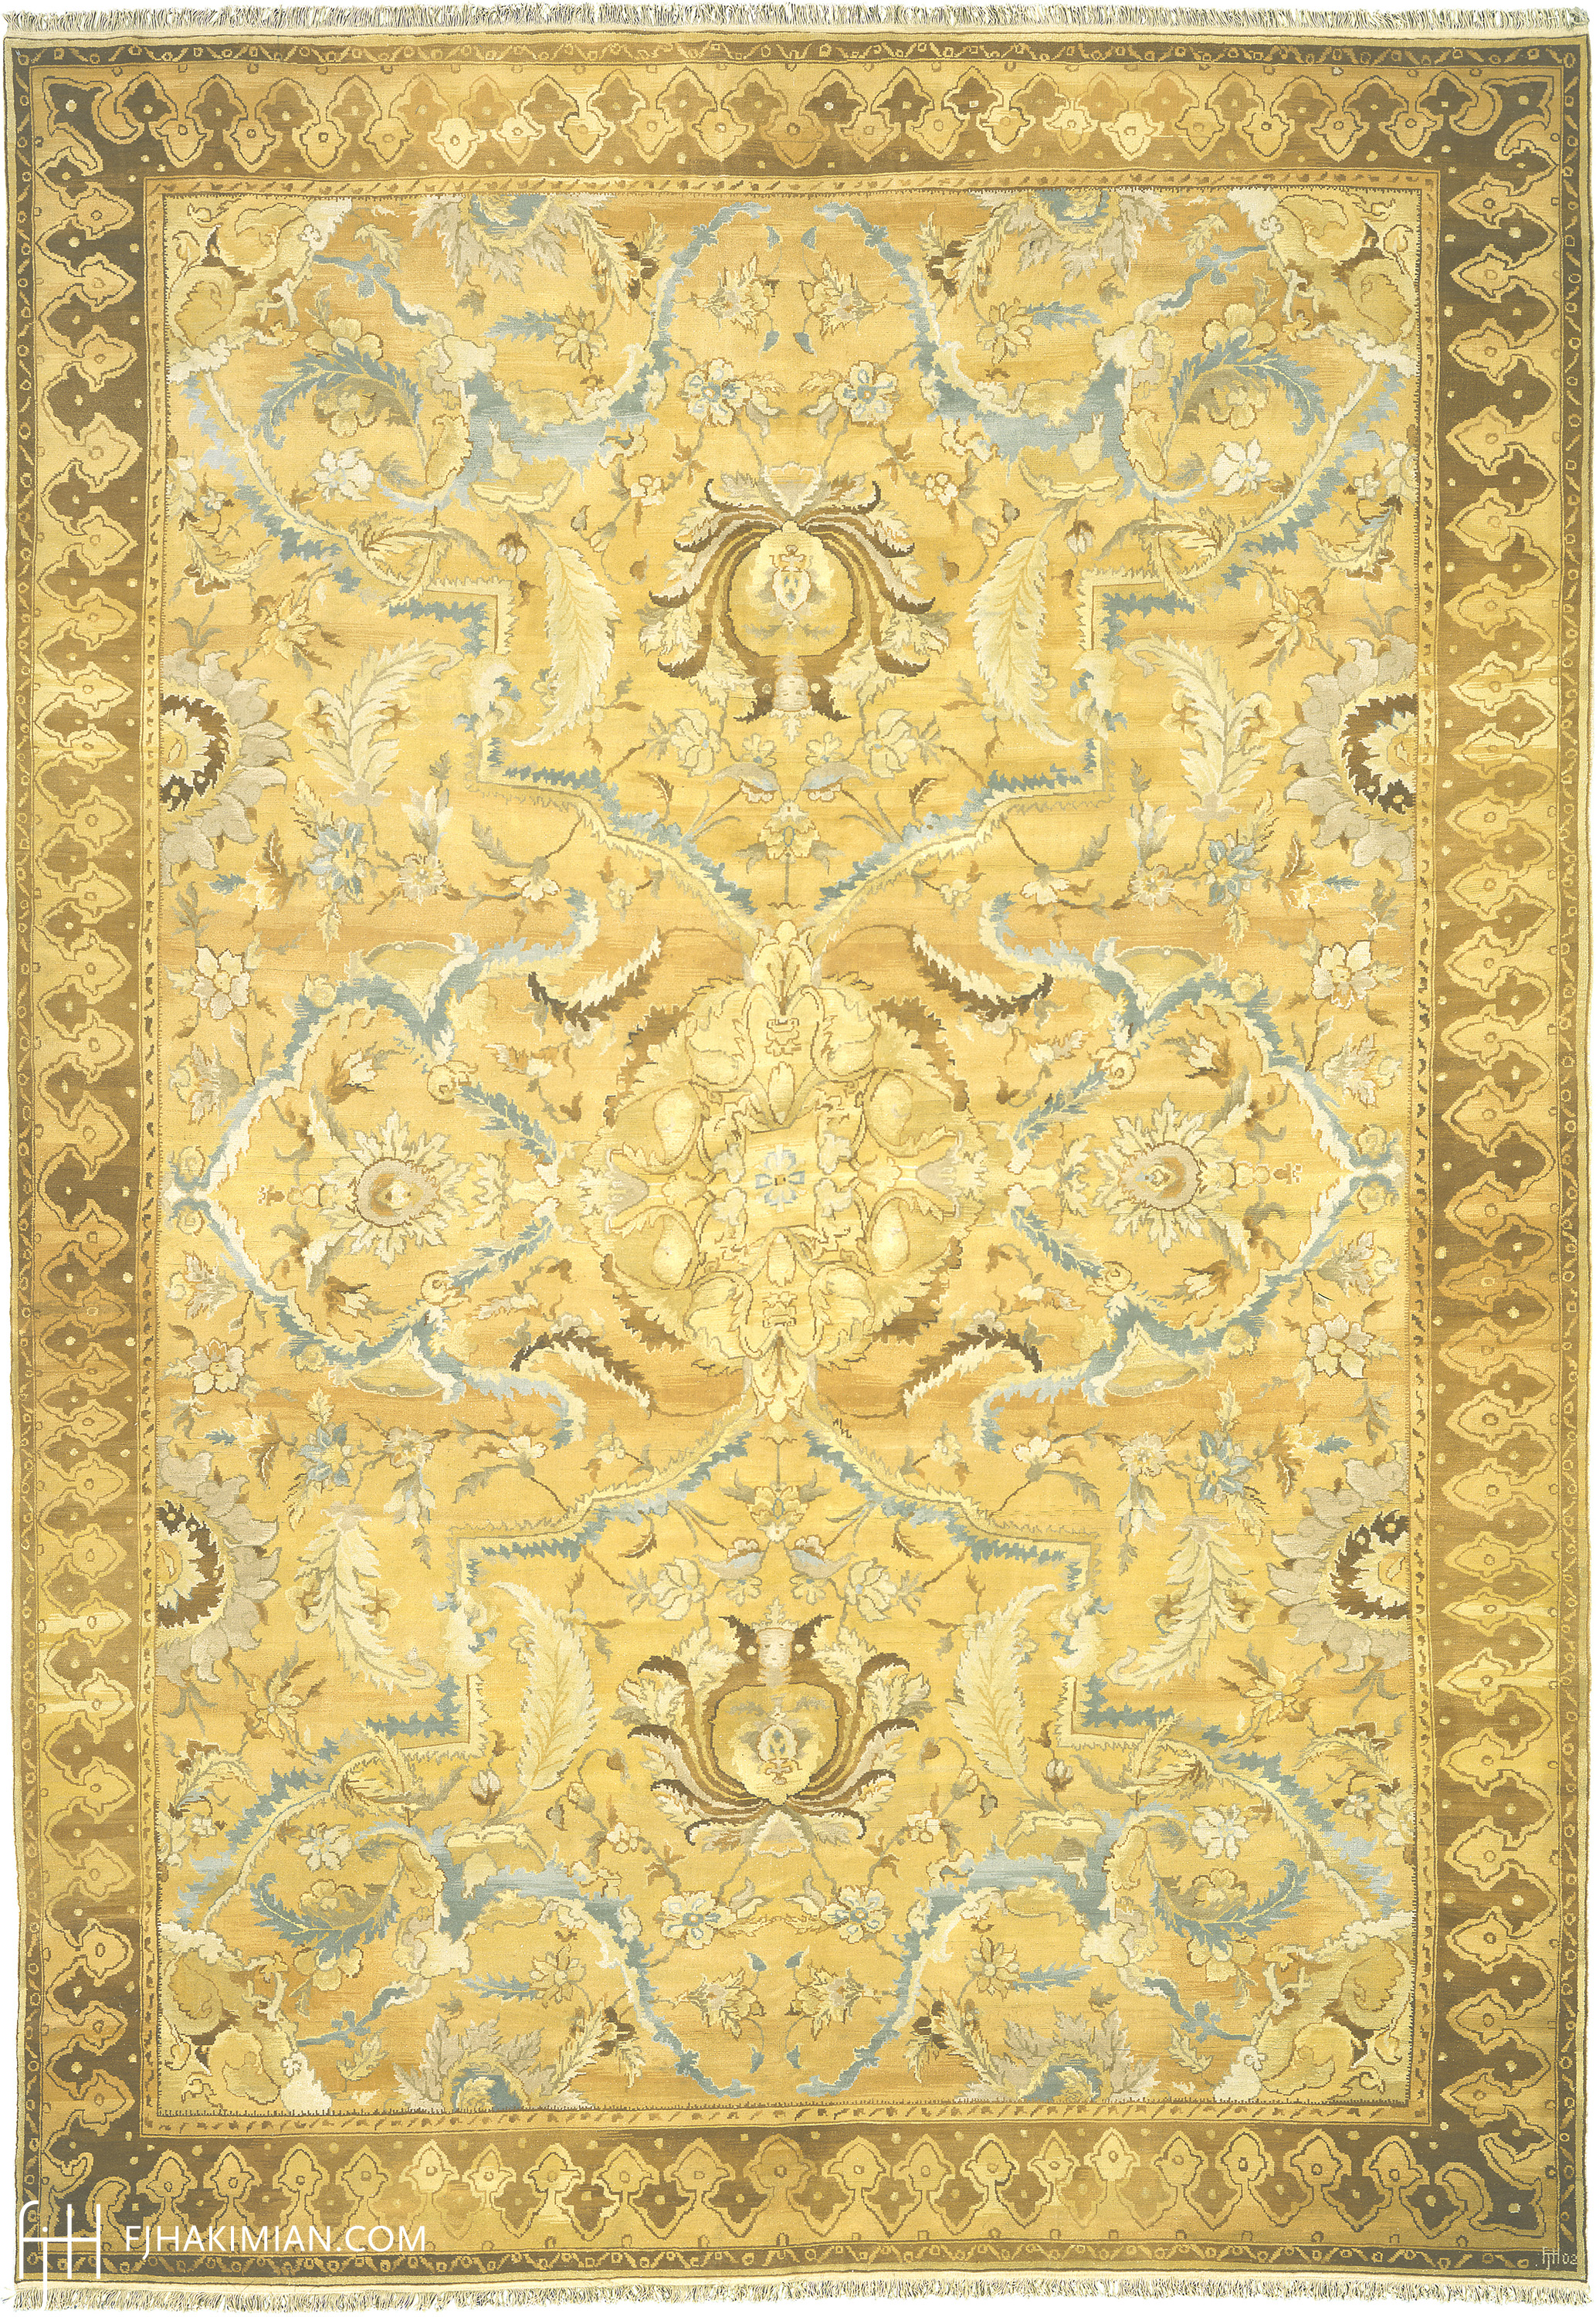 Custom Feathers Design | FJ Hakimian | Carpet Gallery in NY